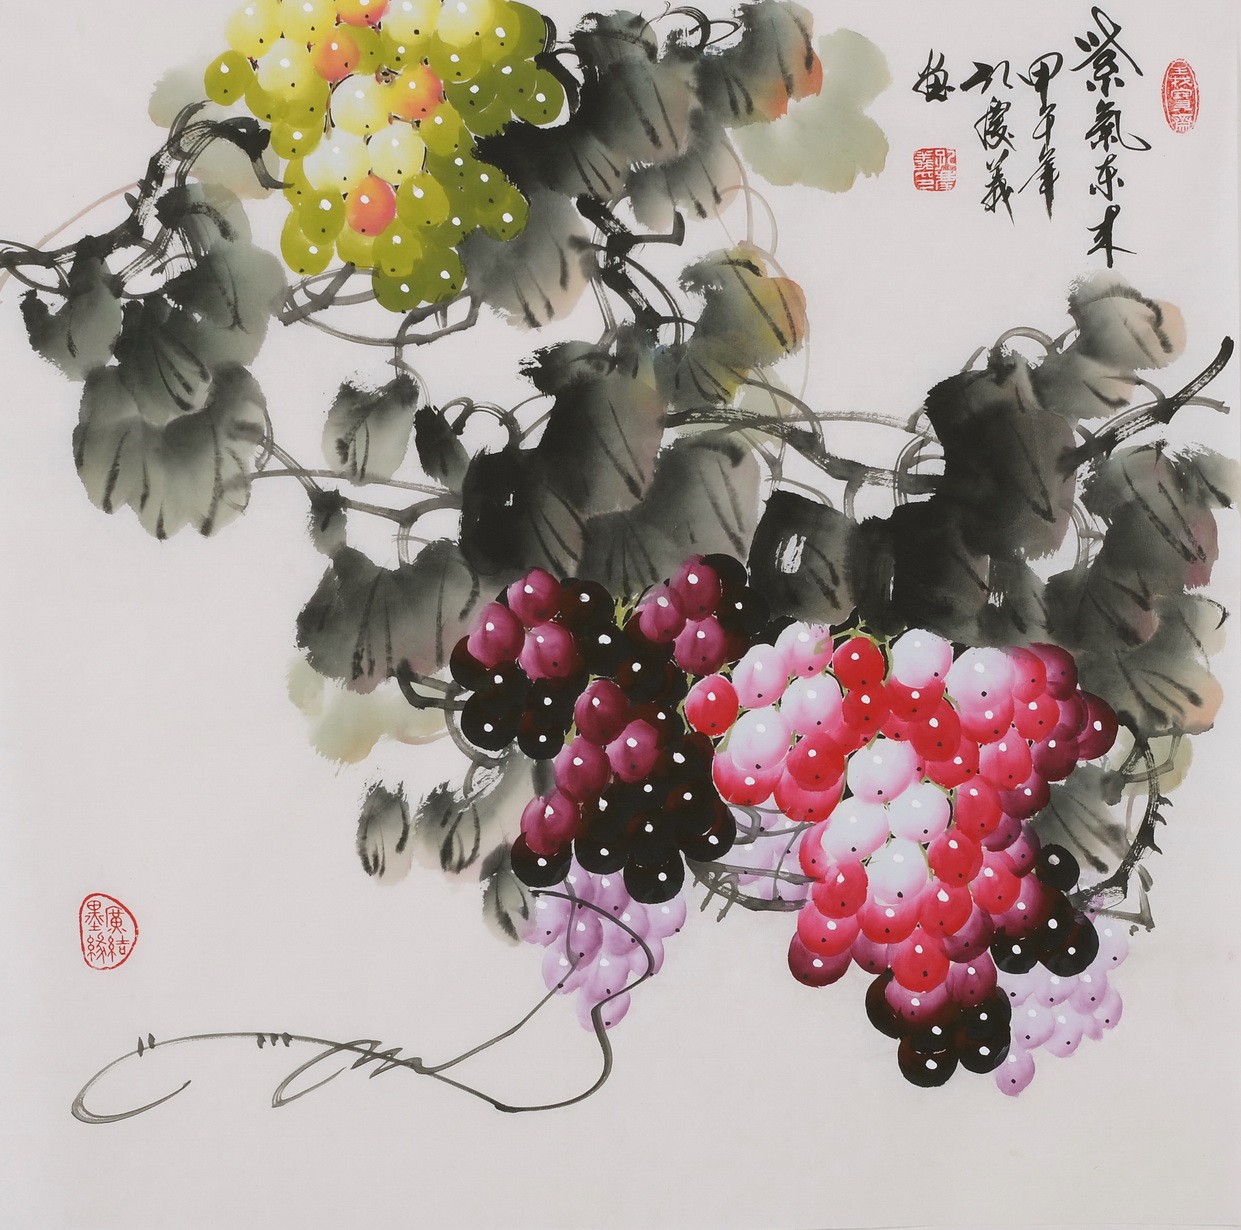 Grapes - CNAG005869